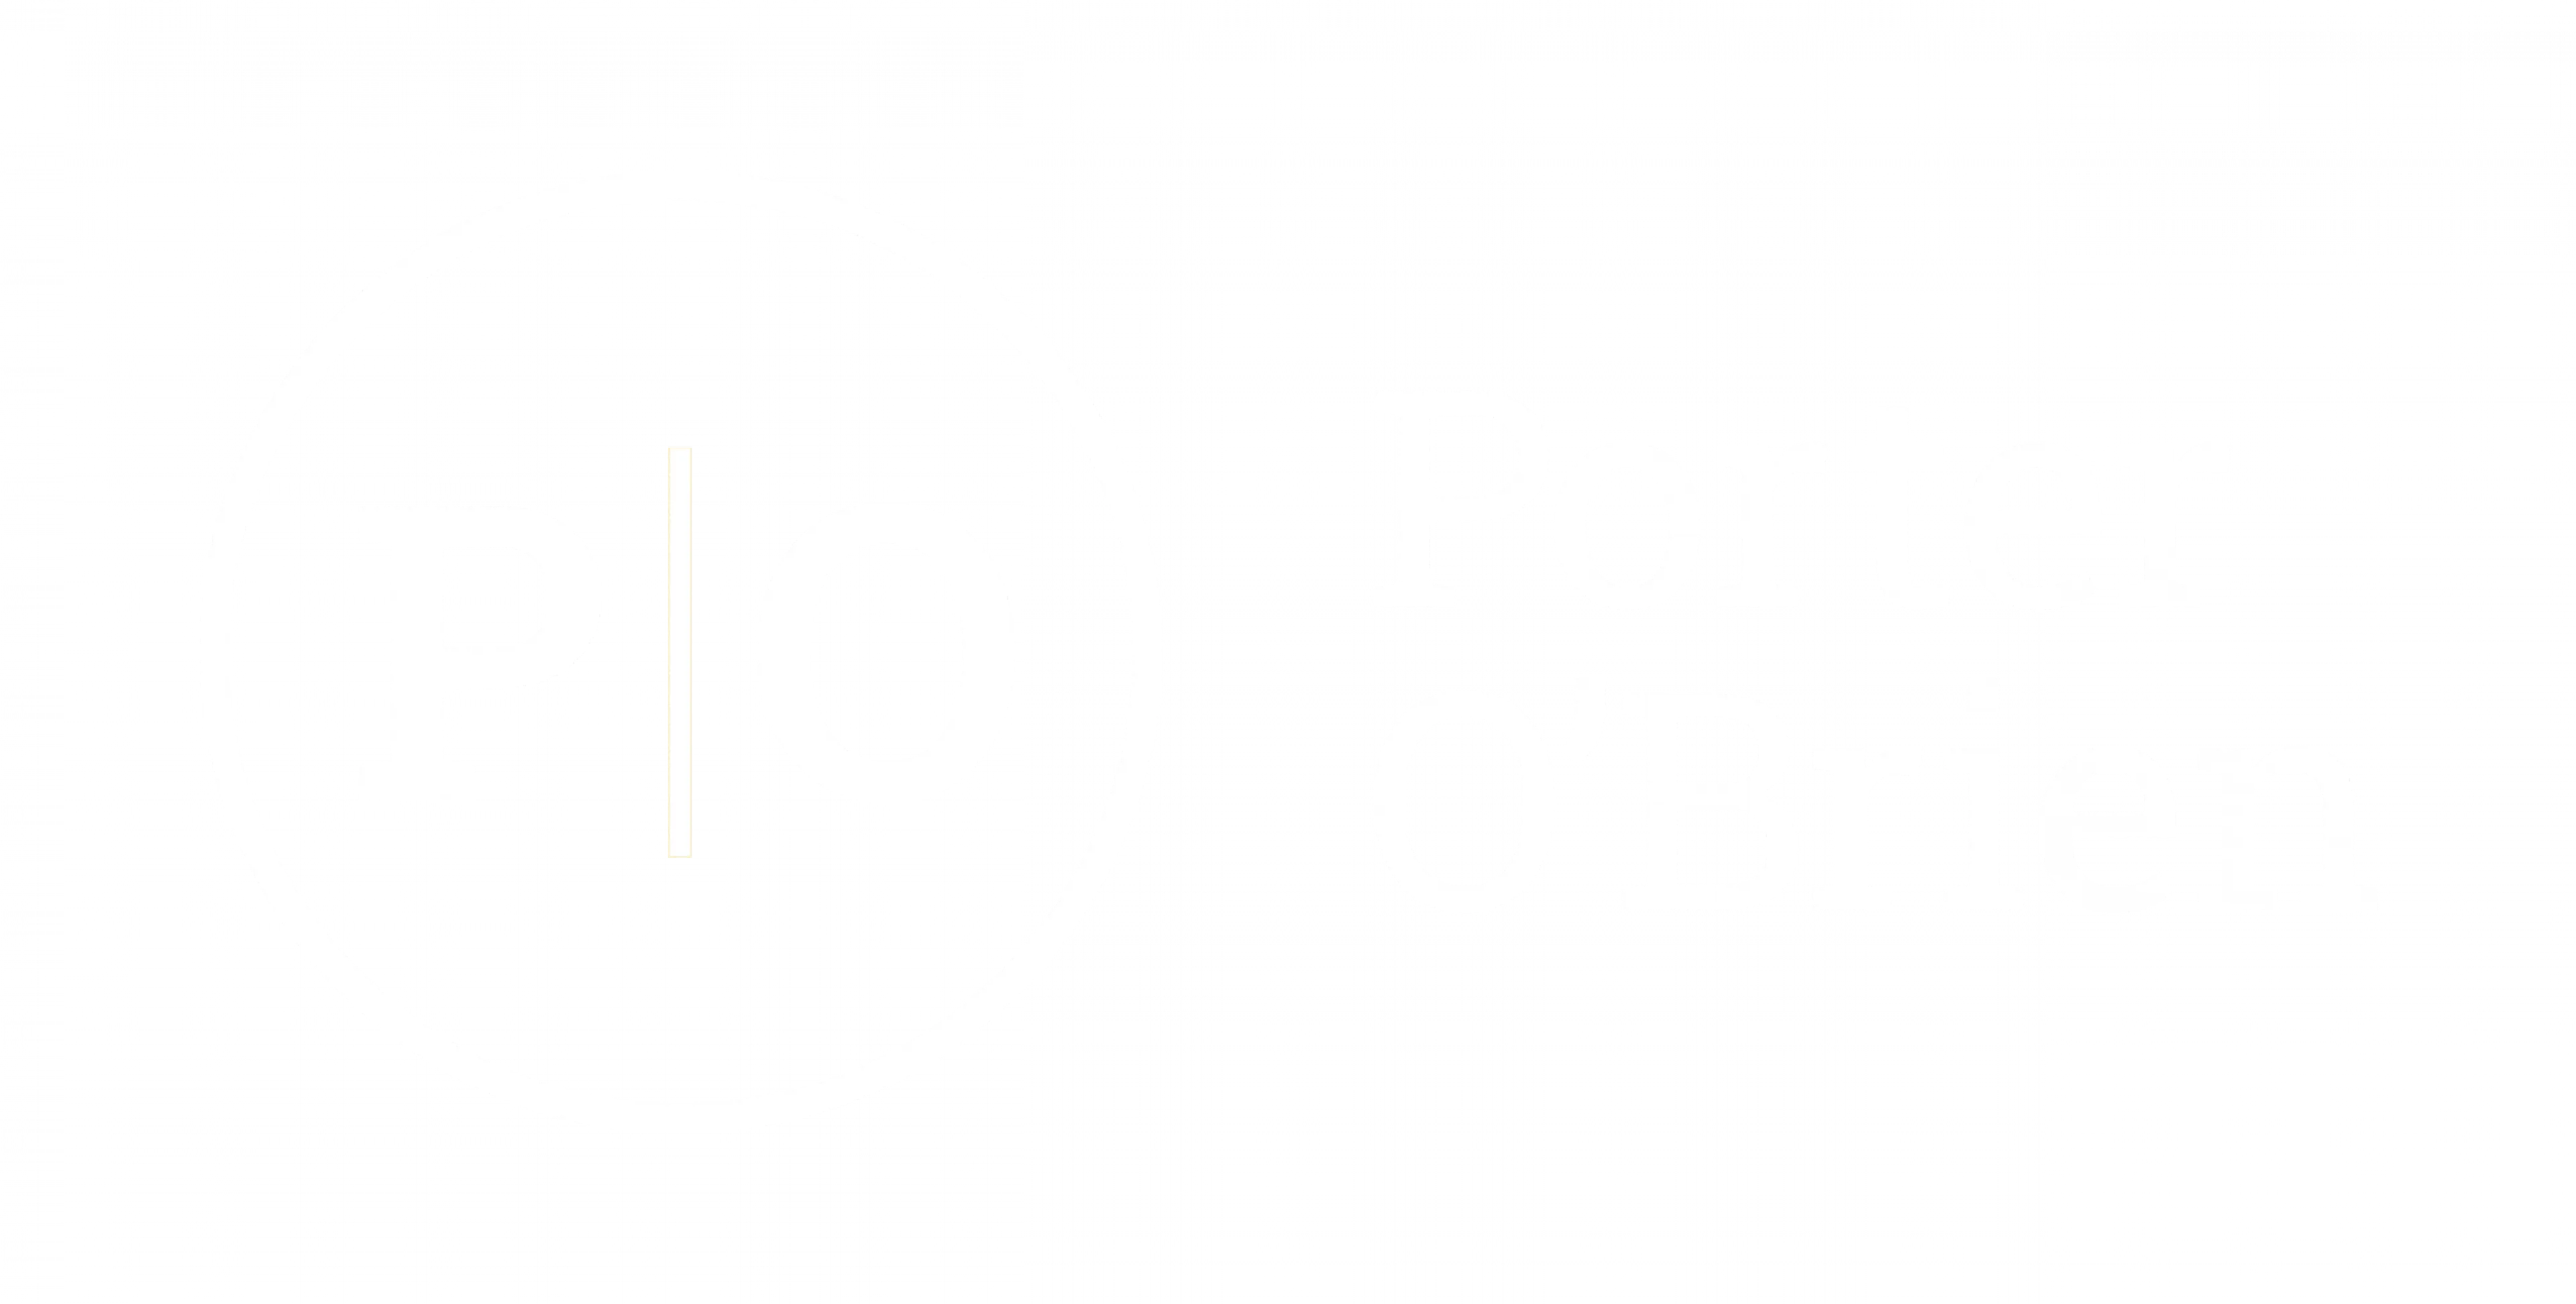 Porter Obrien